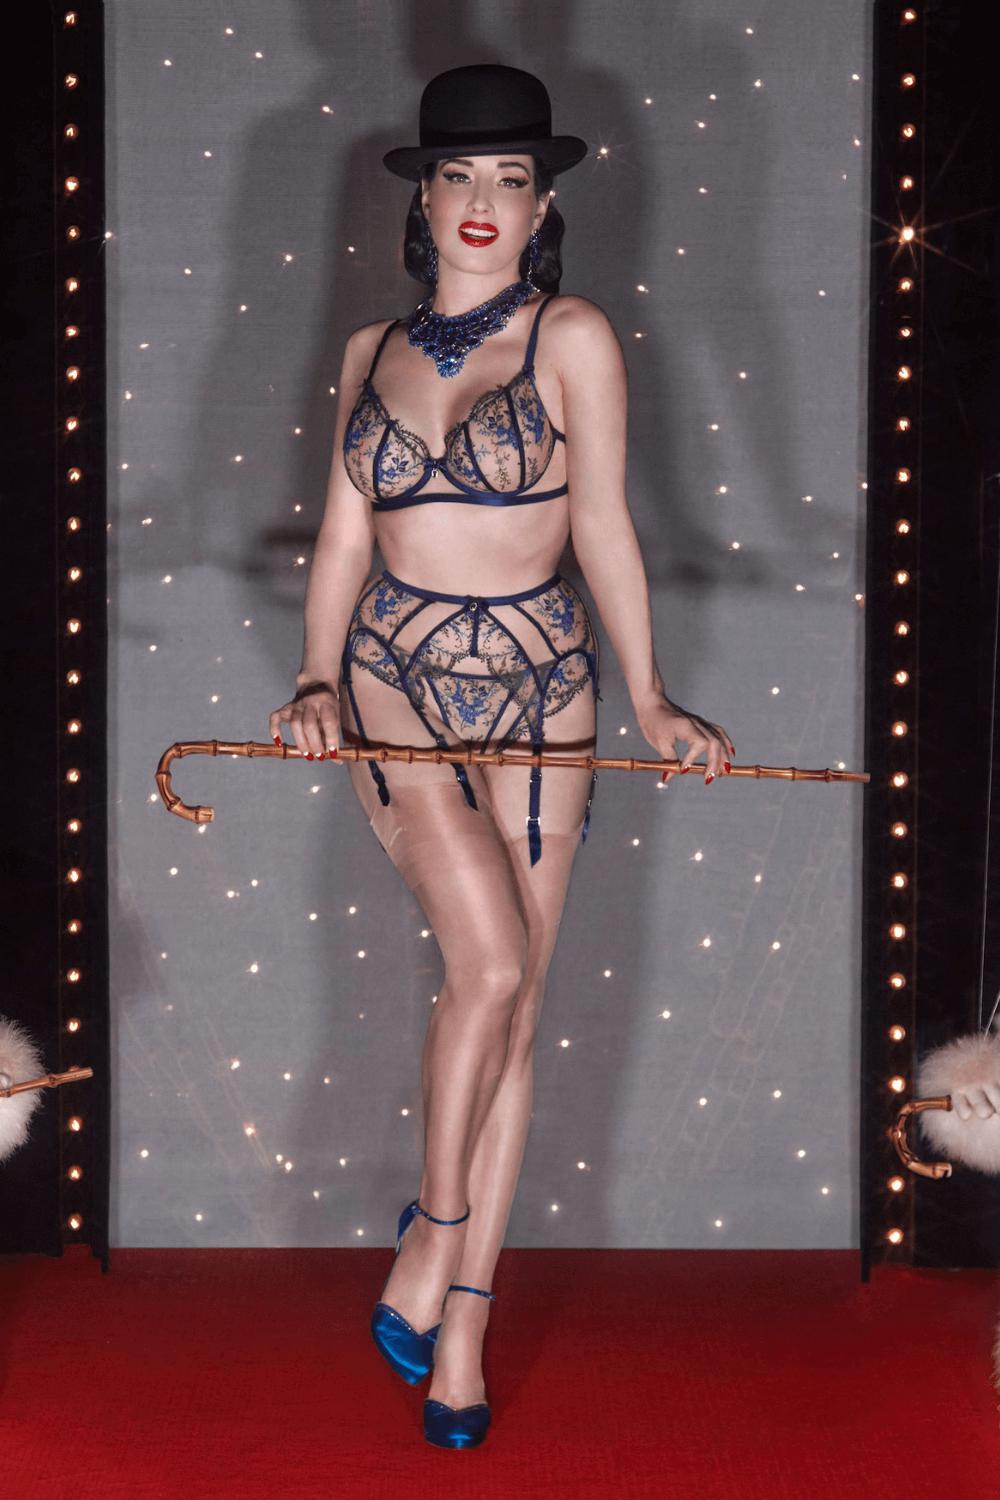 Femmoiselle Sheer Suspender Belt Queen's Blue-Dita Von Teese-Rebel Romance